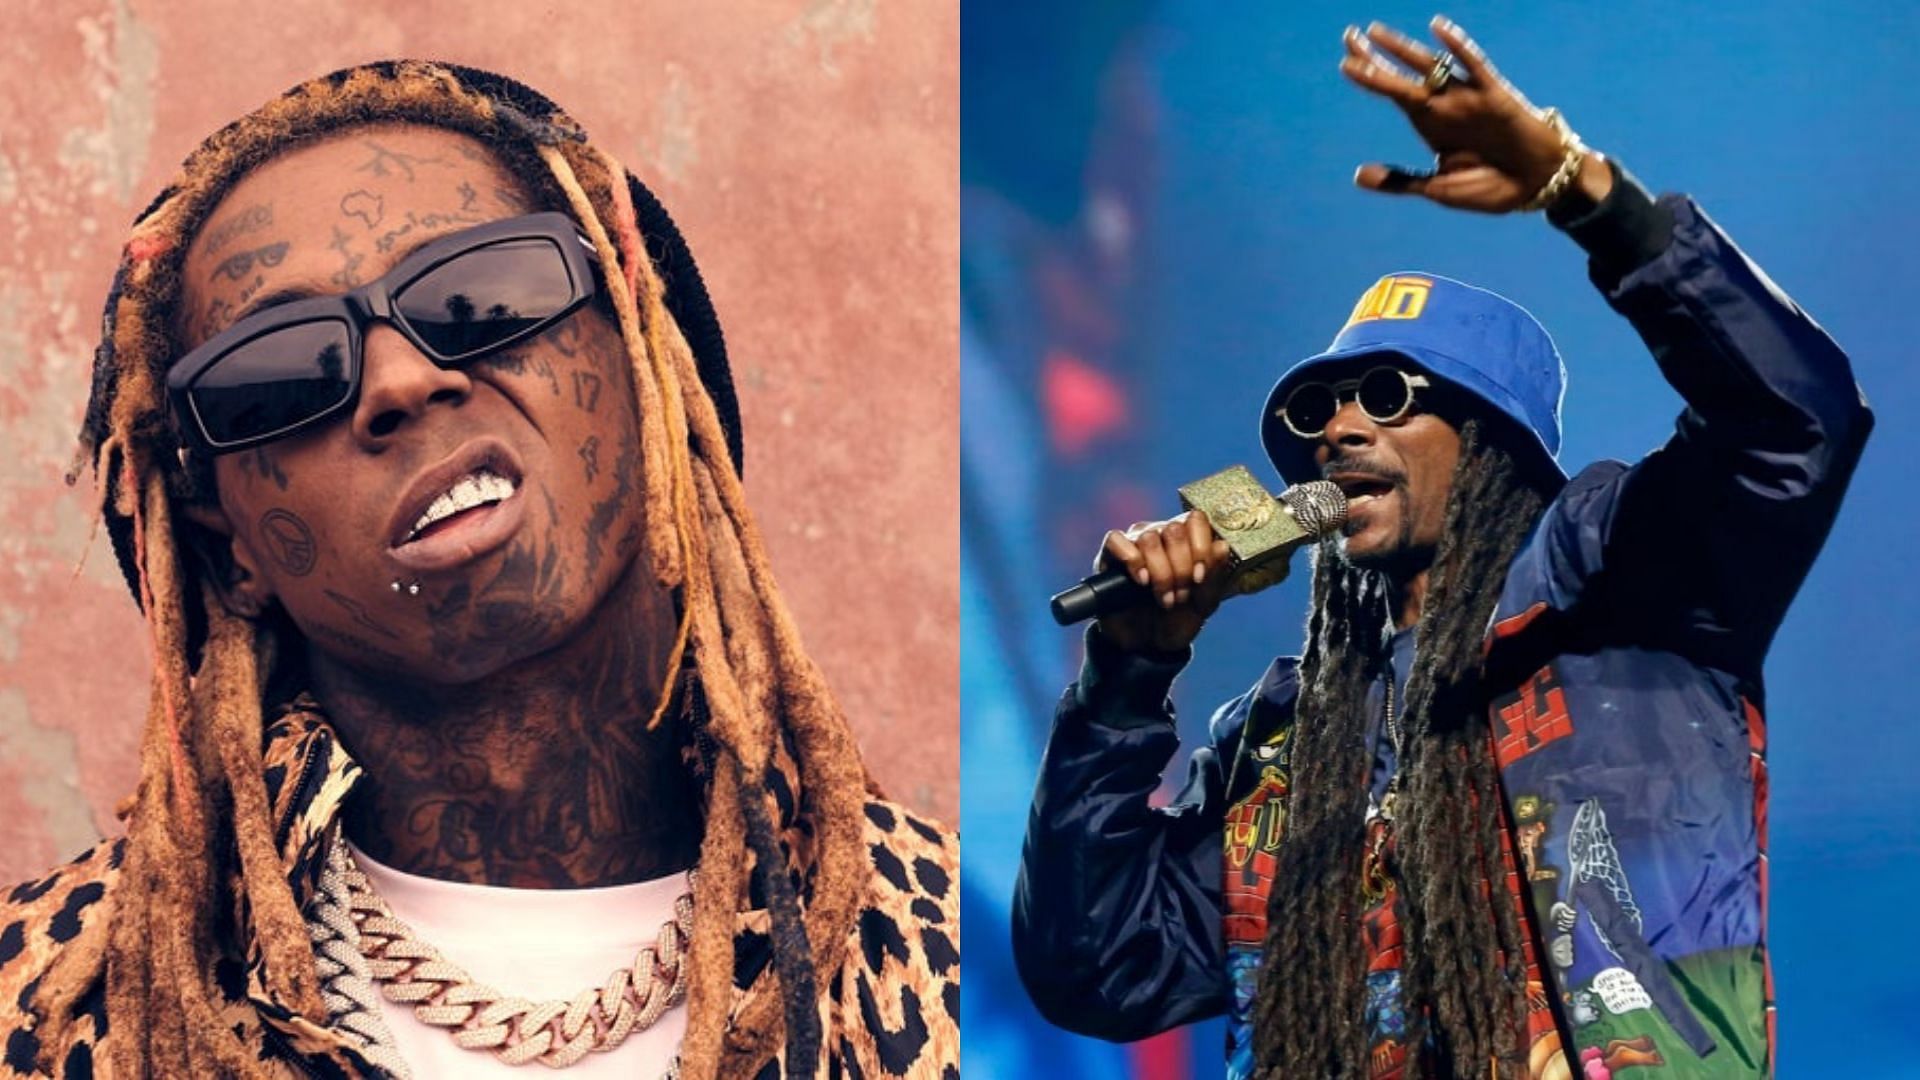 Lil Wayne and Snoop Dogg (Image via Ticketmaster wesbite)